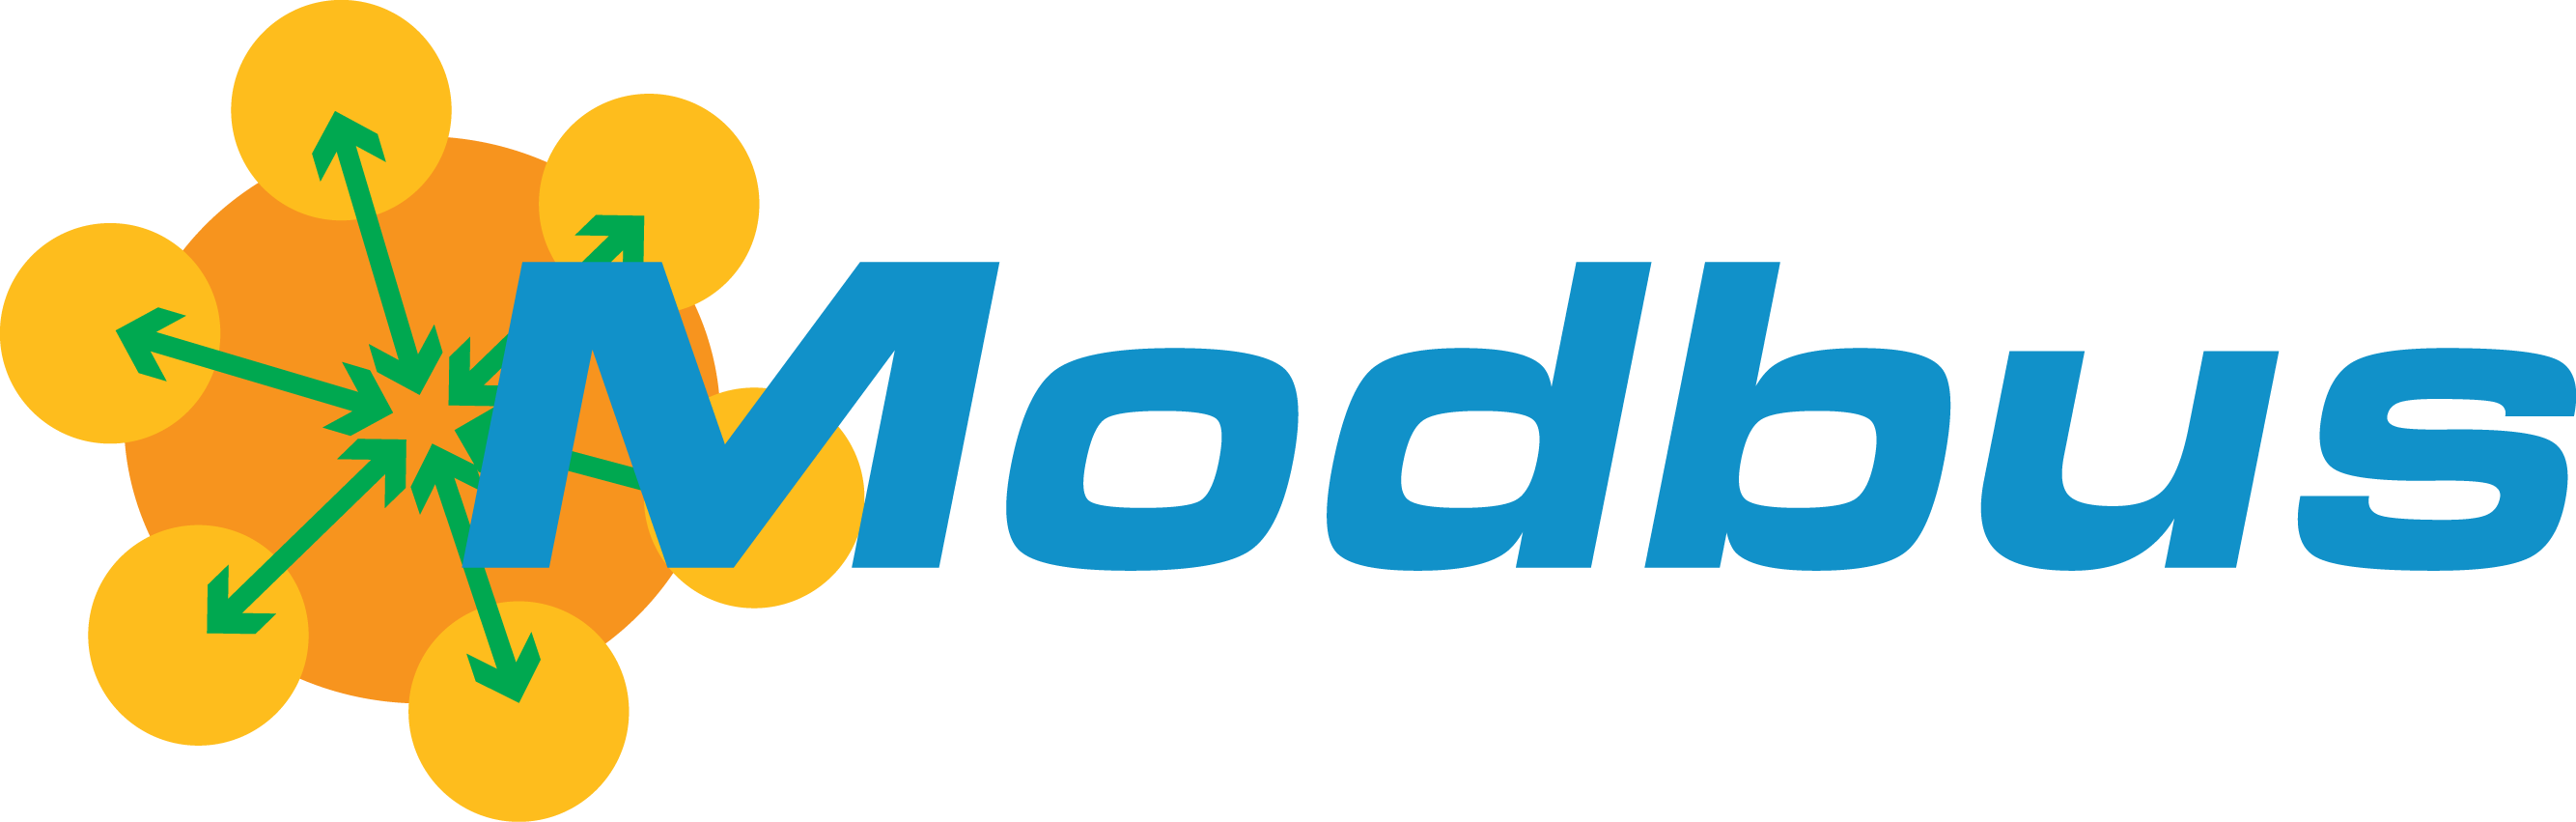 modbus logo - modbus_logo